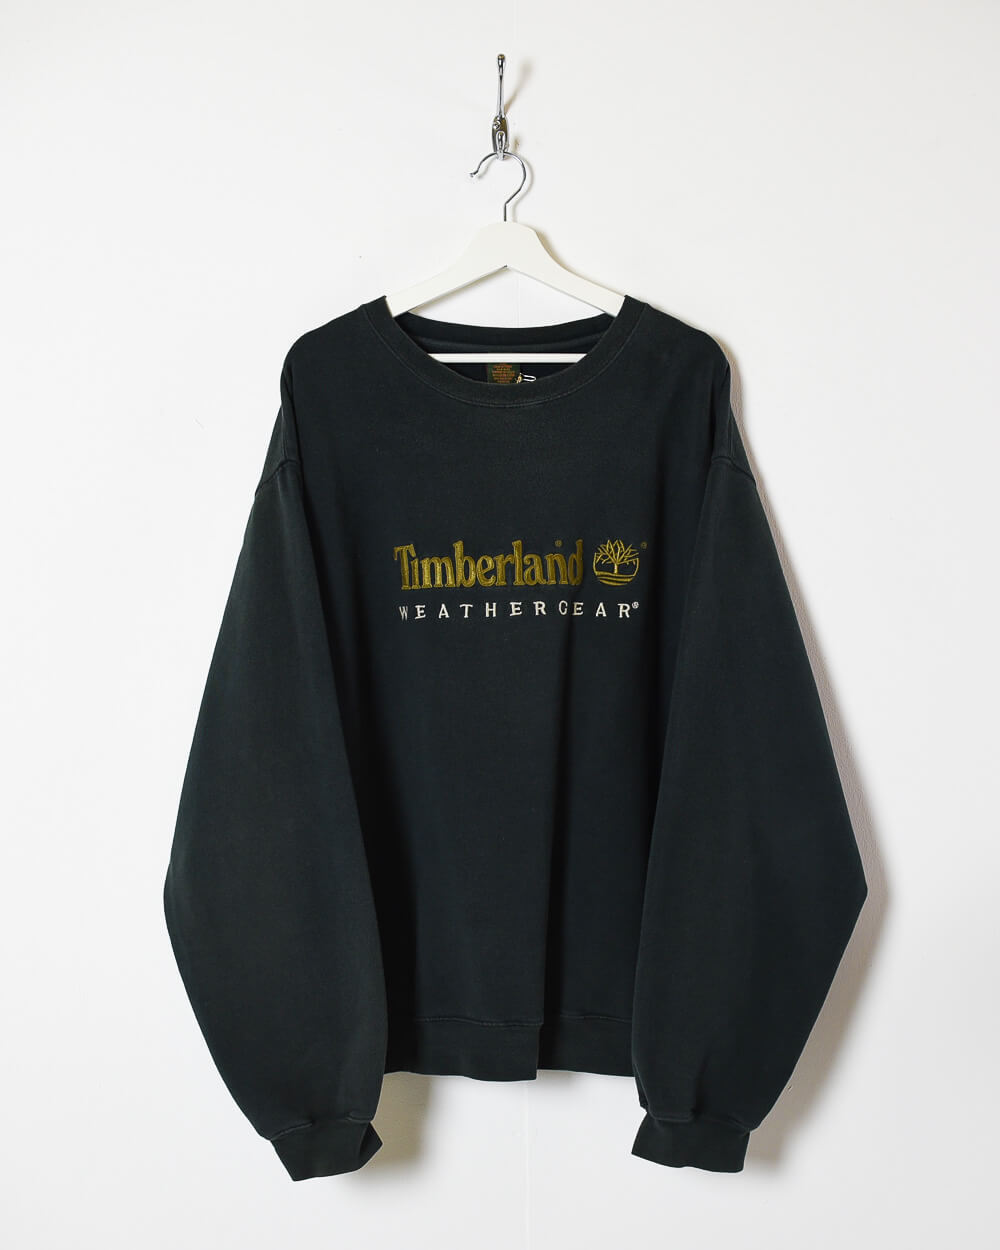 Black Timberland Weather Gear Sweatshirt - XX-Large